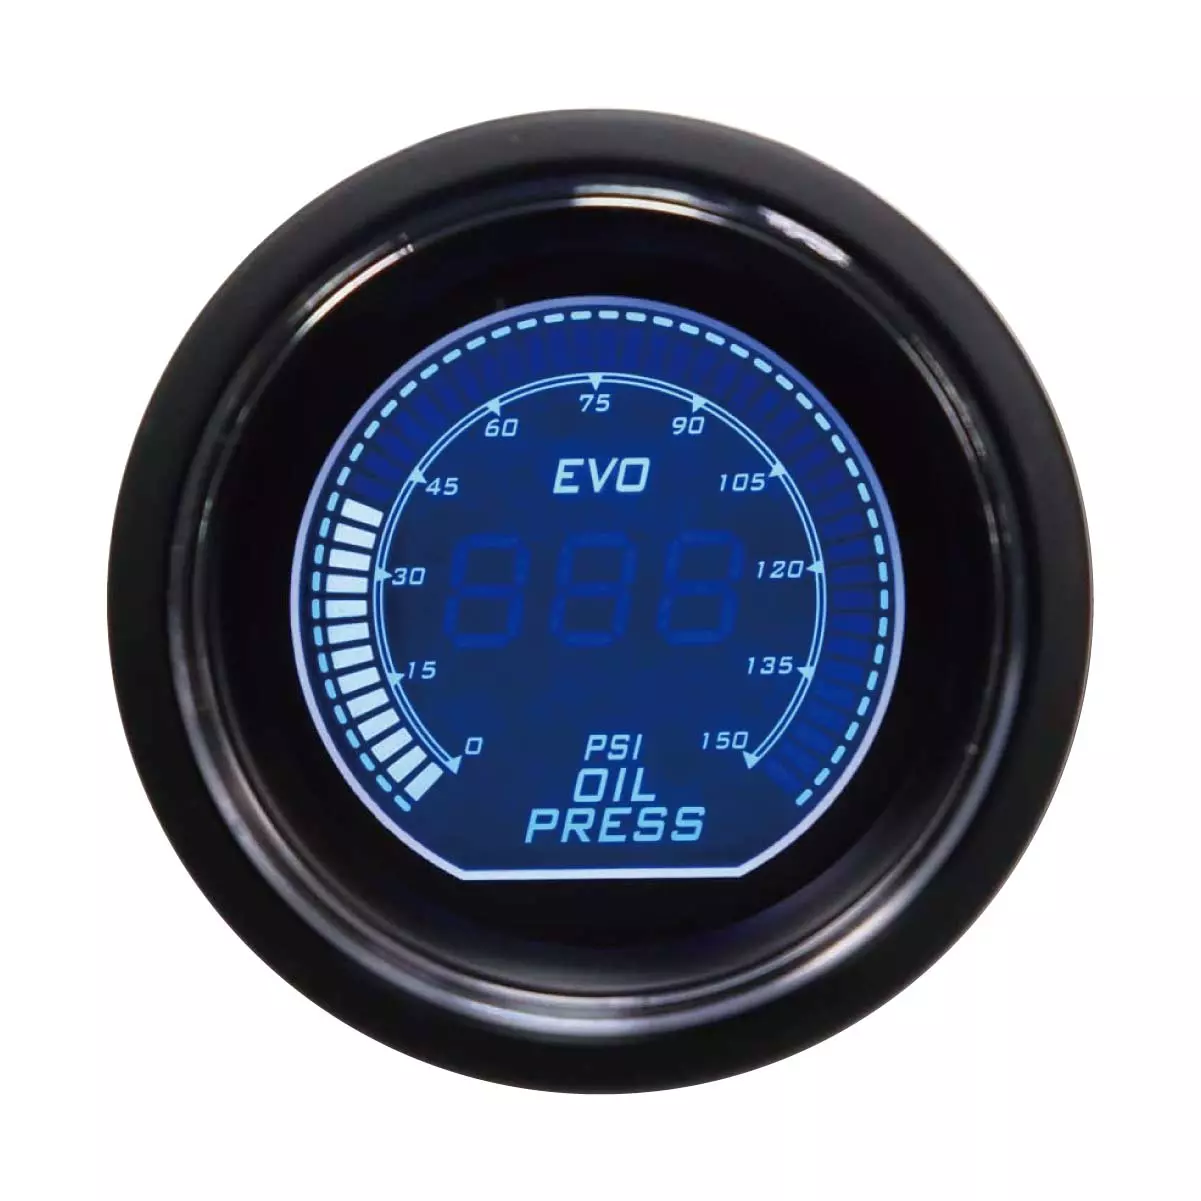 MOTOR METER RACING EVO Series Oil Pressure Gauge PSI Blue Red Backlit Included Electronic Sensor Kits